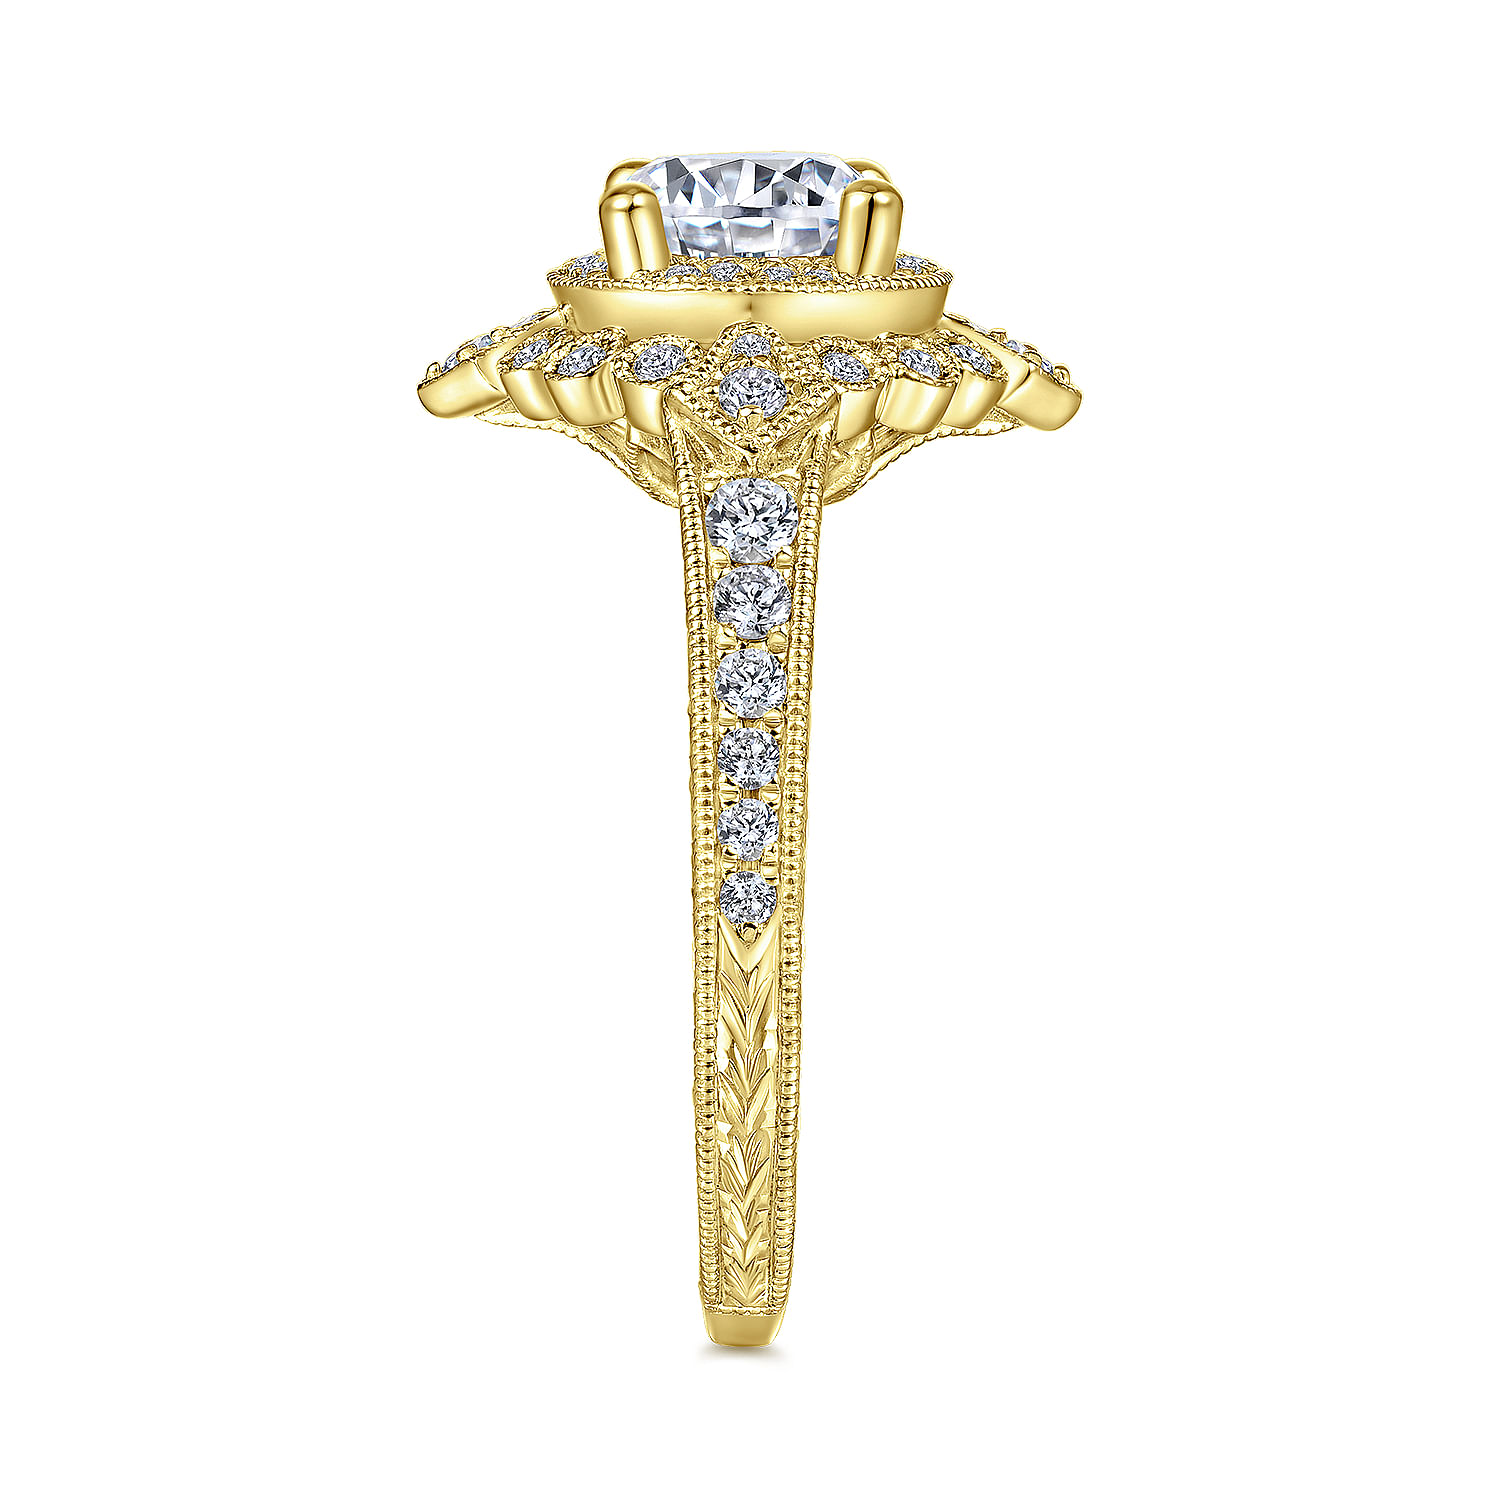 Art Deco 14K Yellow Gold Round Double Halo Diamond Engagement Ring